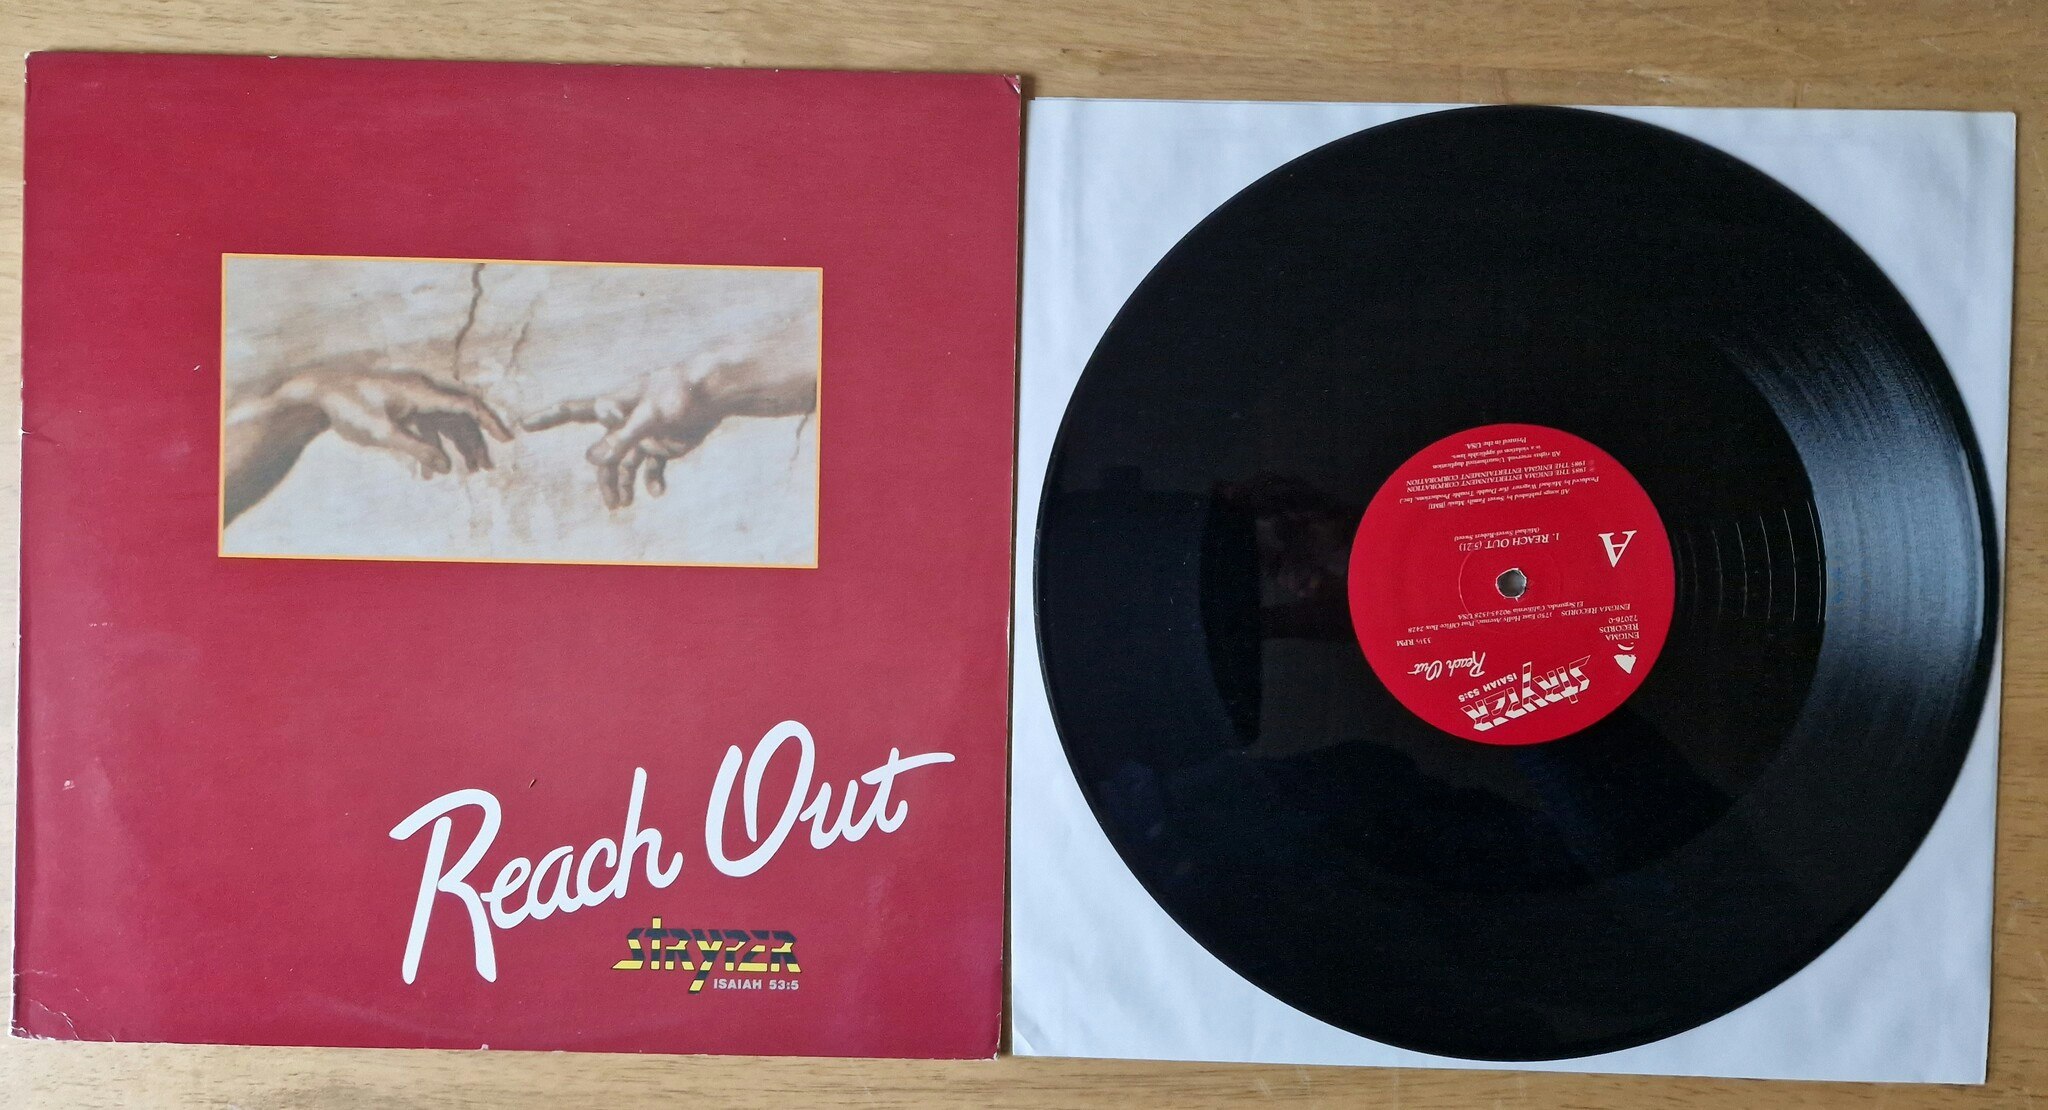 Stryper, Reach out. Vinyl S 12"